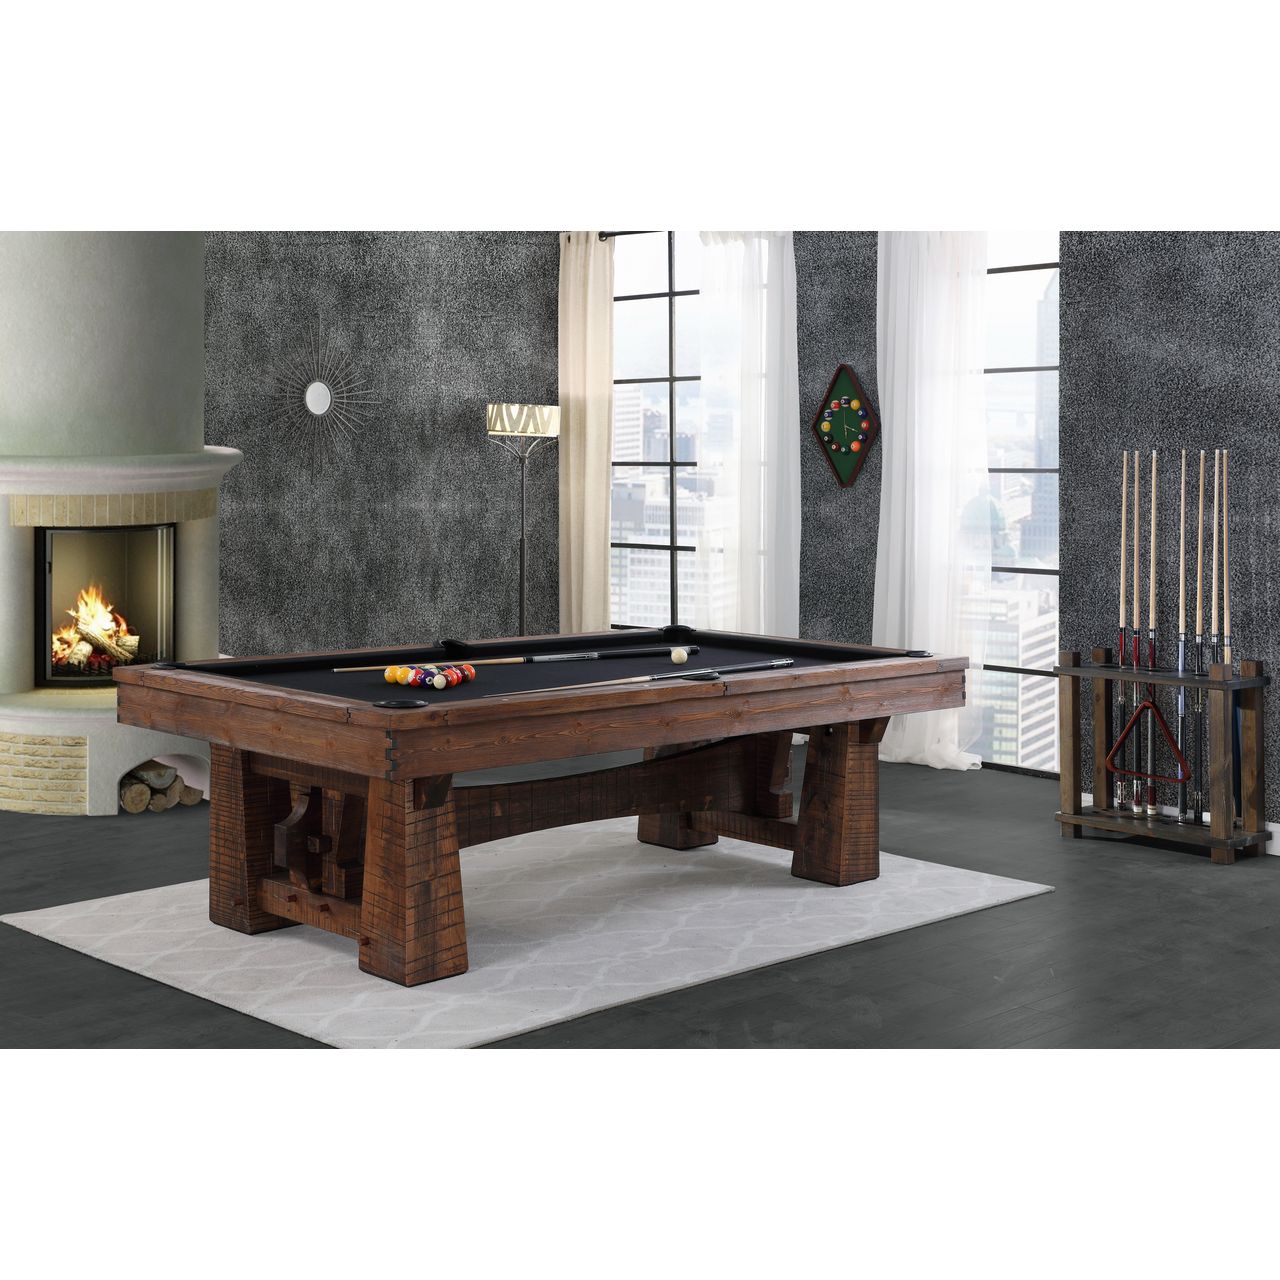 Playcraft Bull Run 8' Slate Pool Table with Optional Dining Top - Gaming Blaze